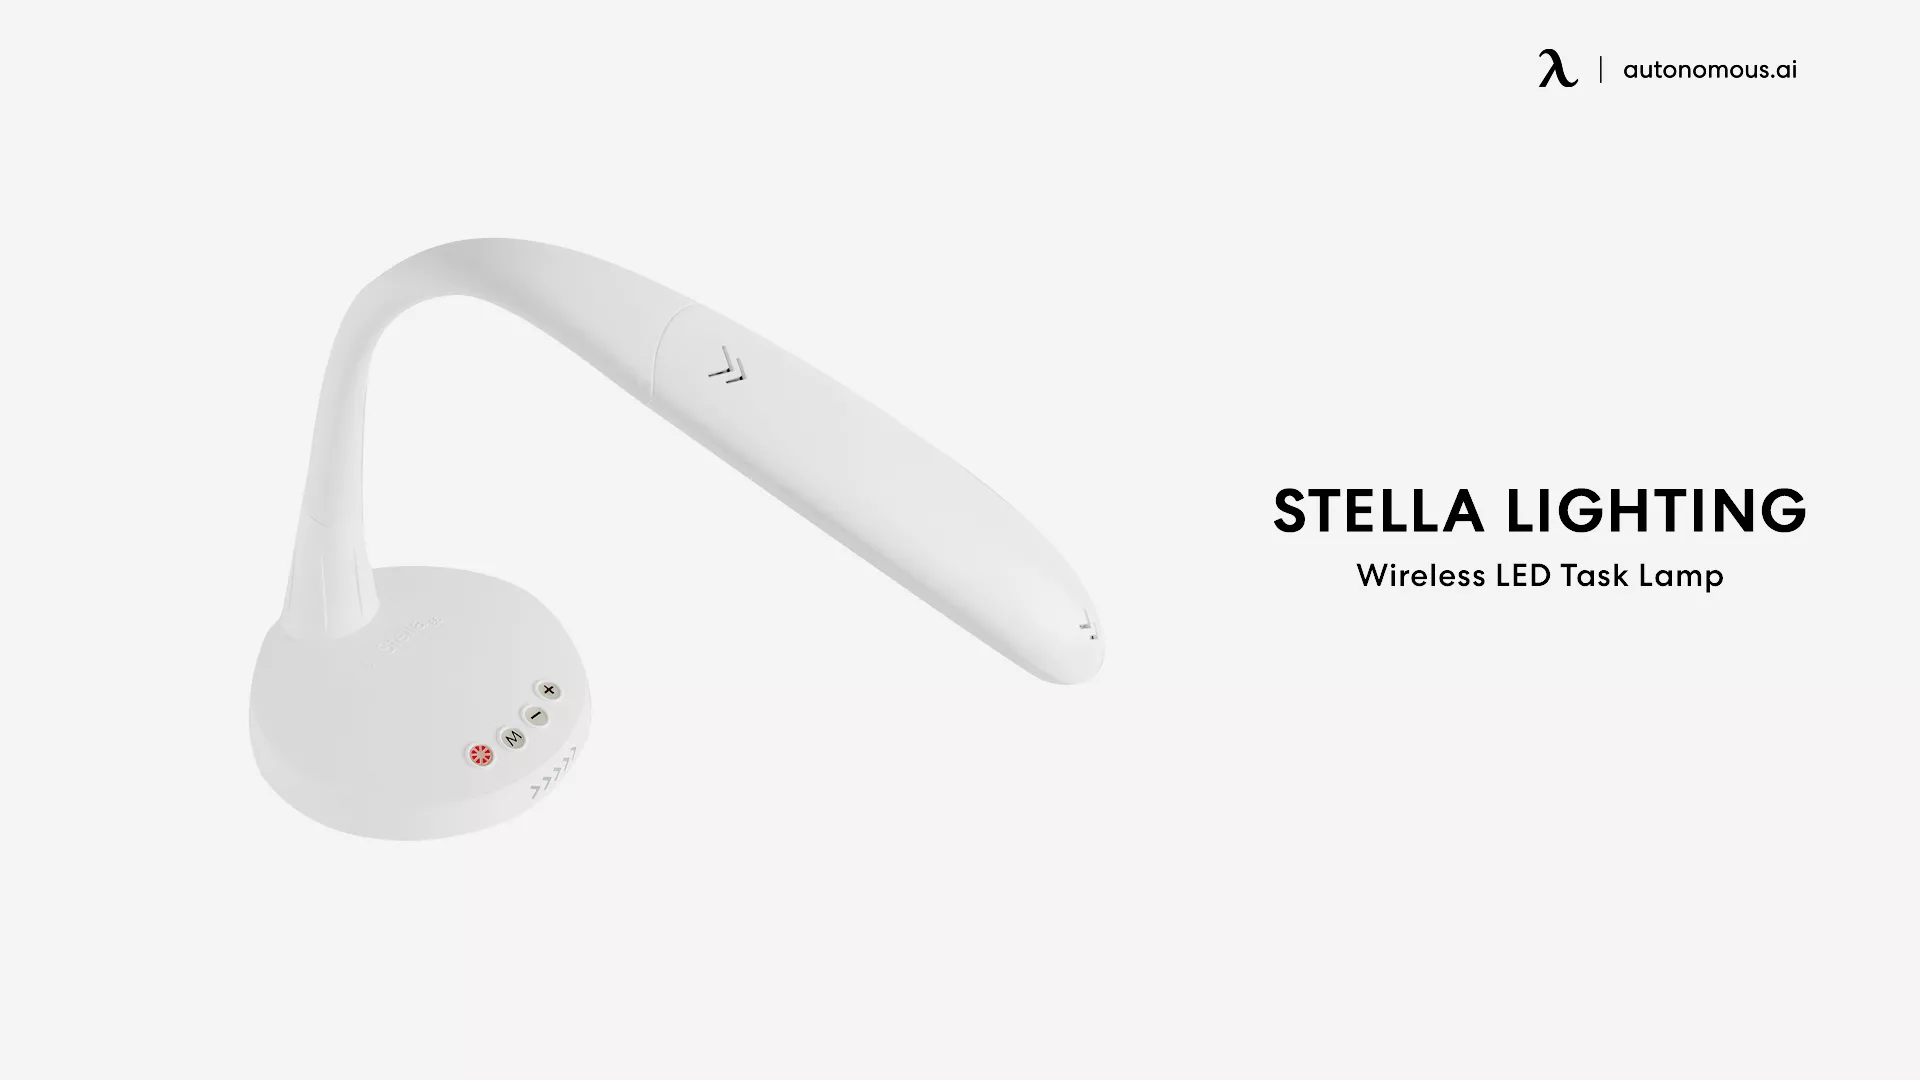 Stella Lighting Wireless LED Task Lamp